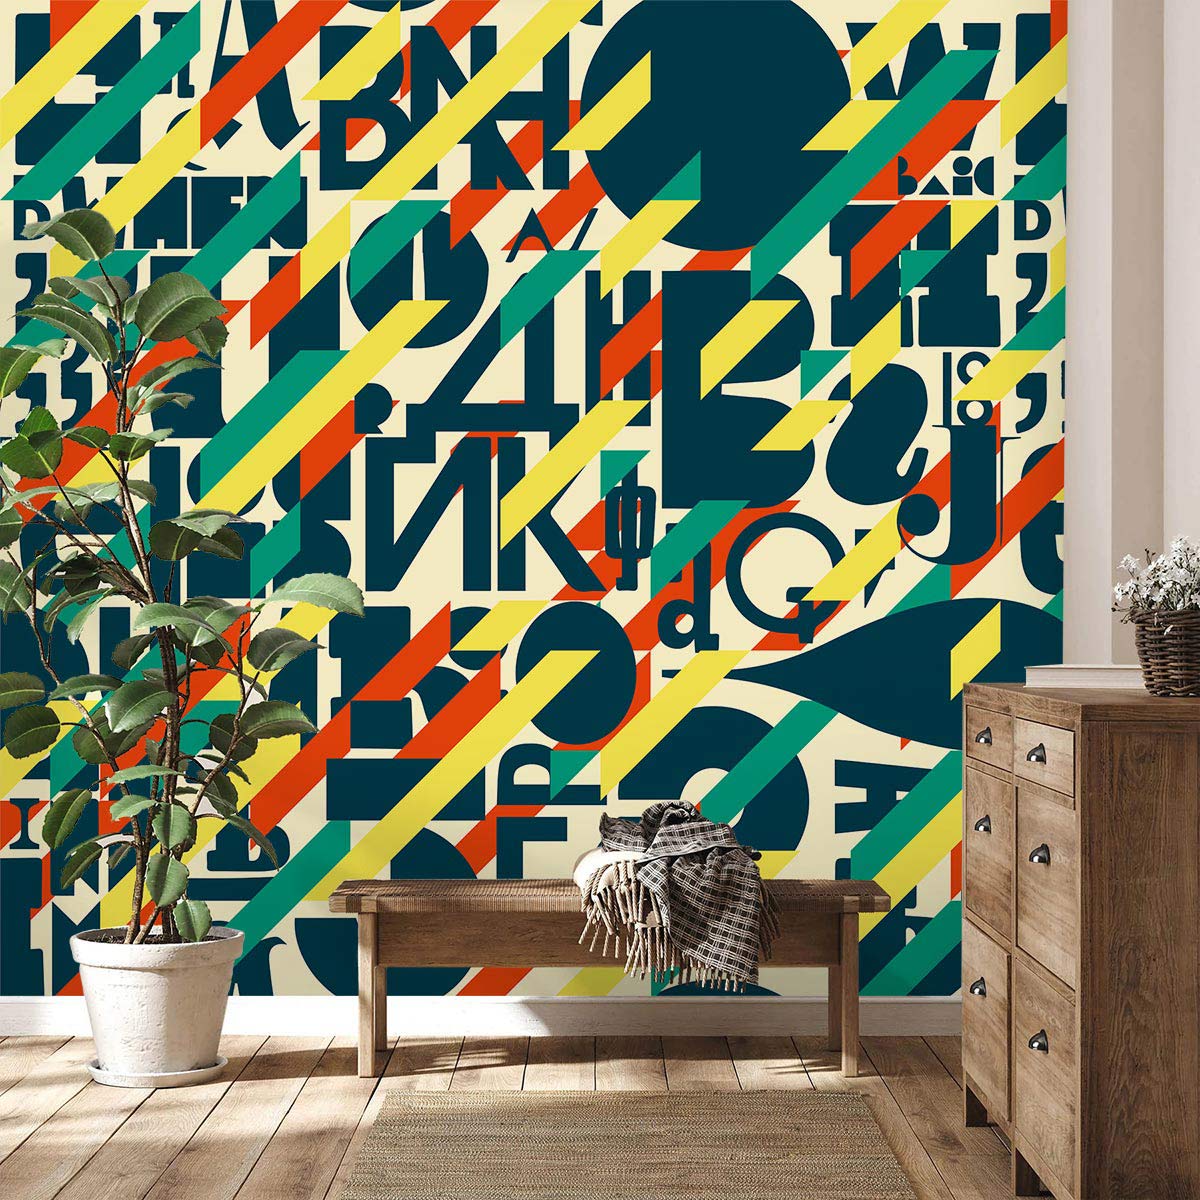 Mixed Letters wallpaper design